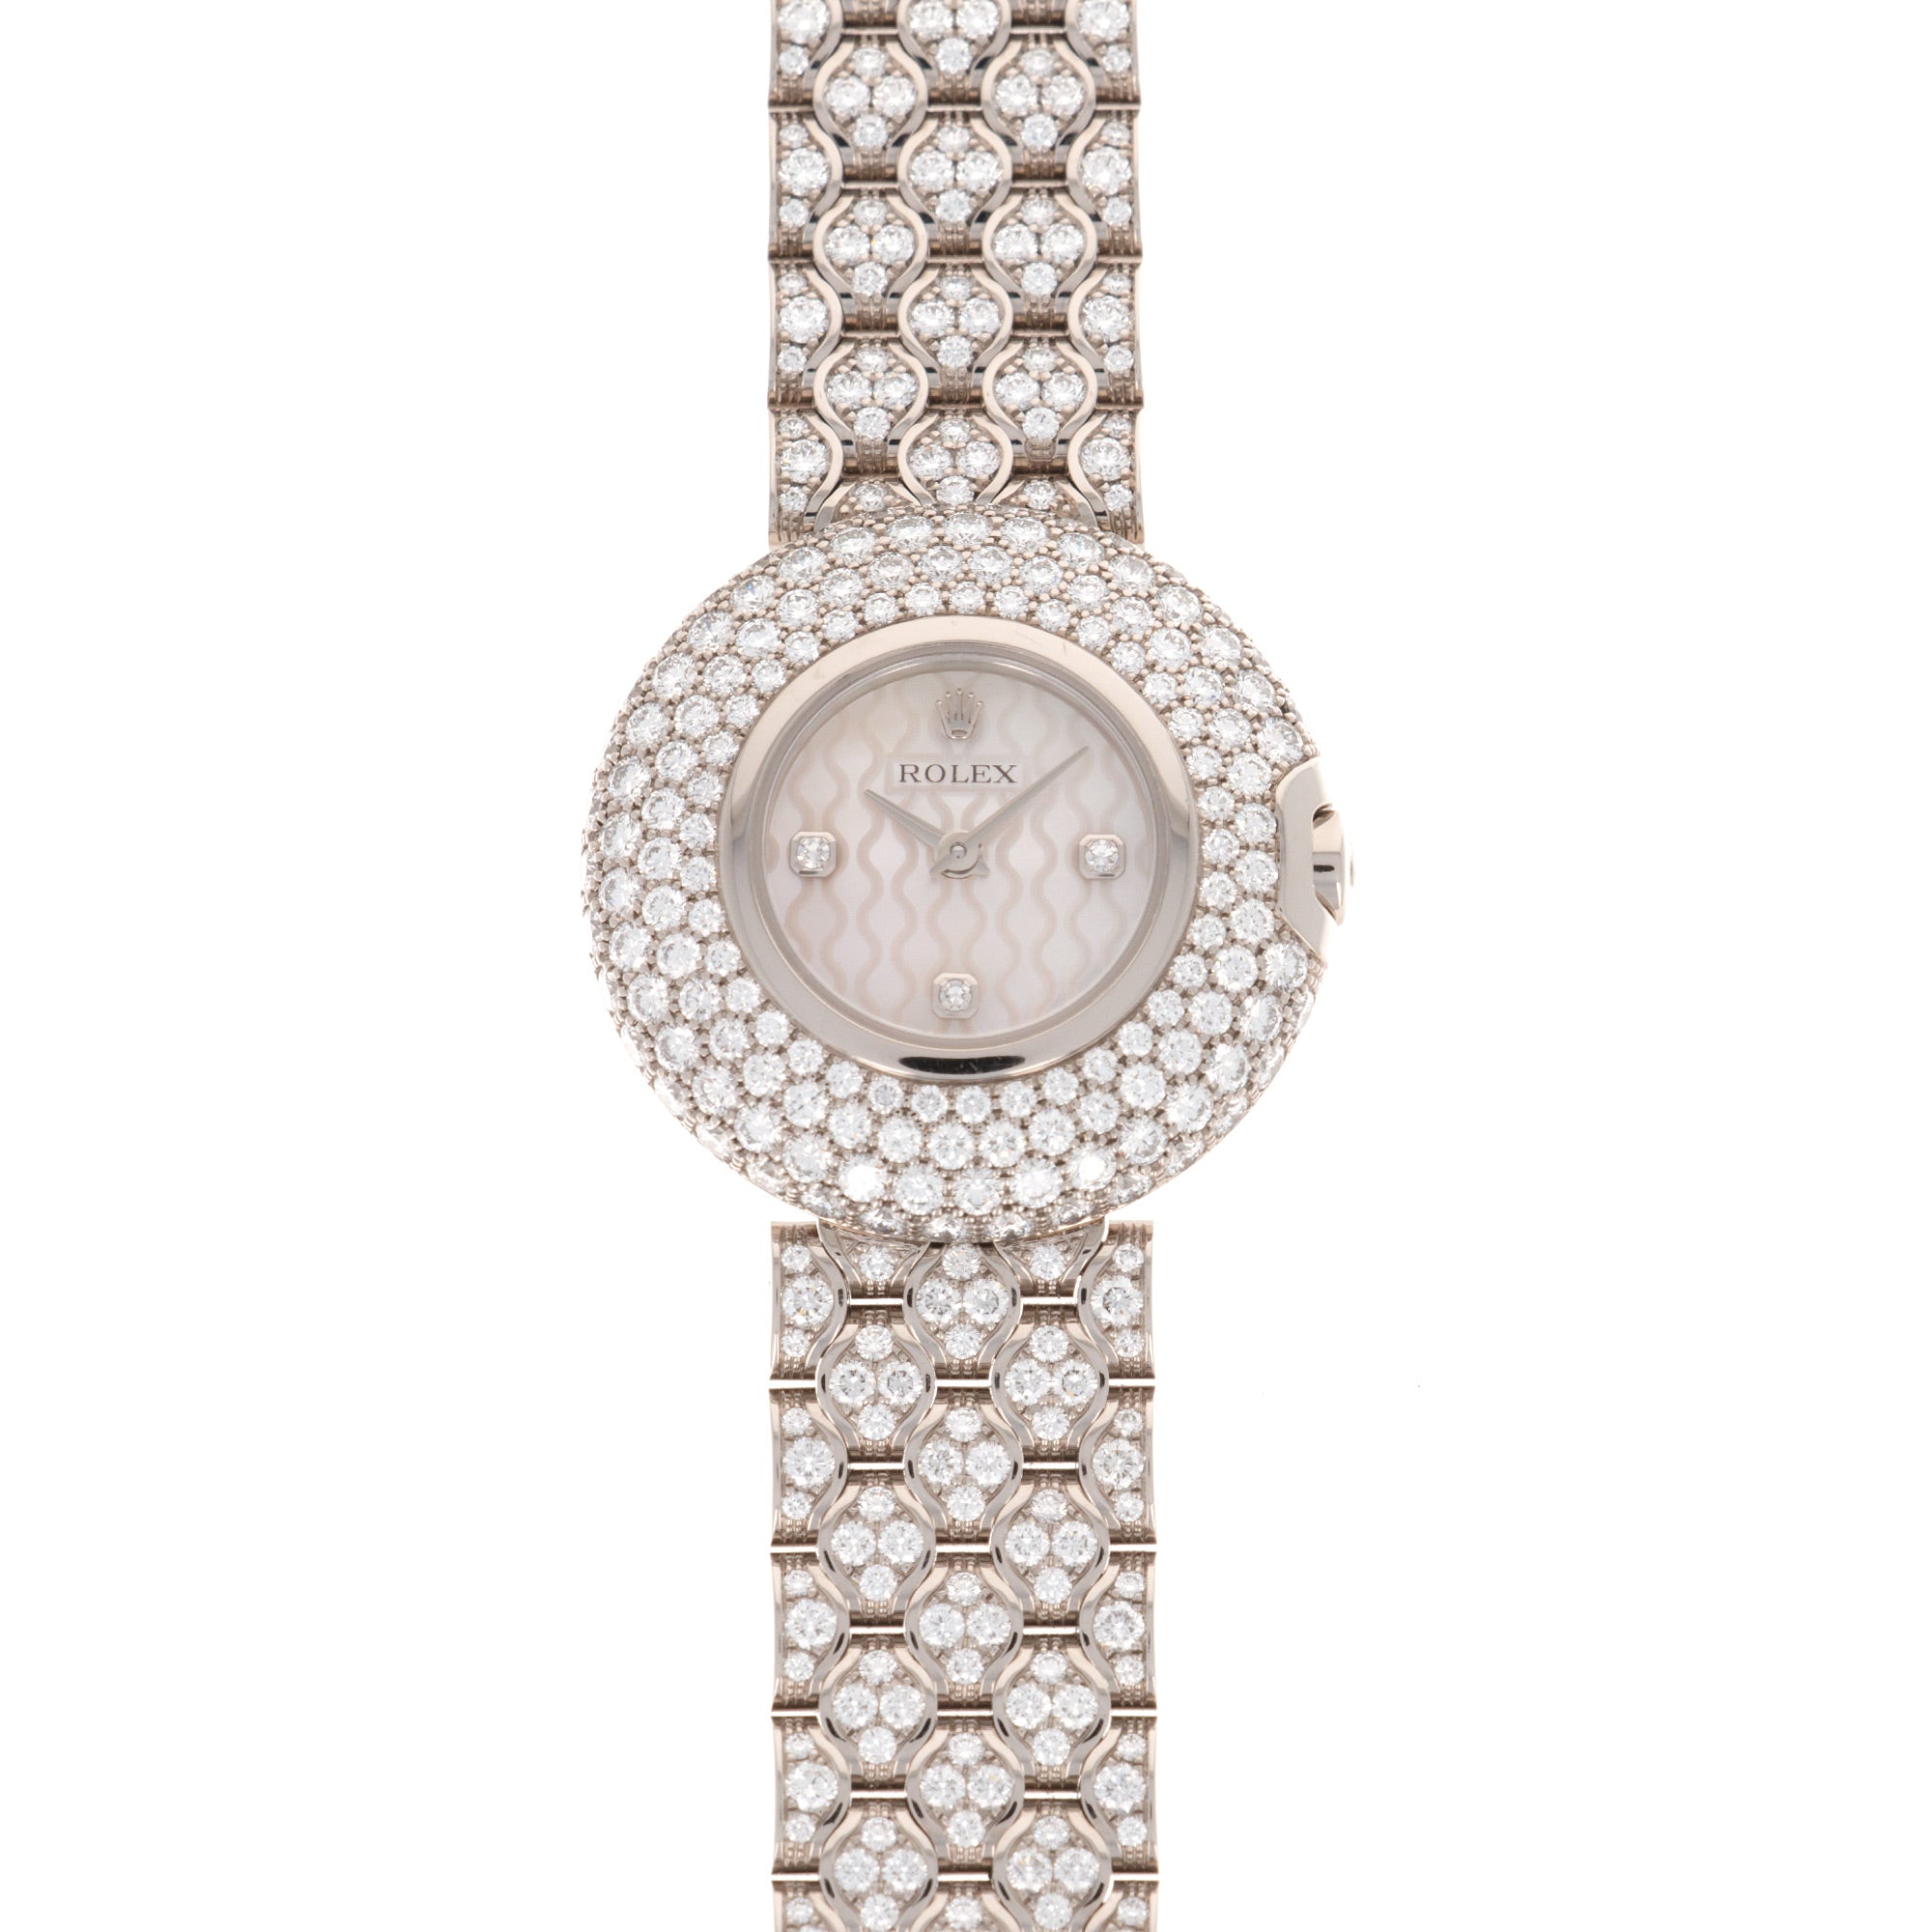 Rolex - Rolex White Gold Orchid Diamond Bracelet Watch - The Keystone Watches